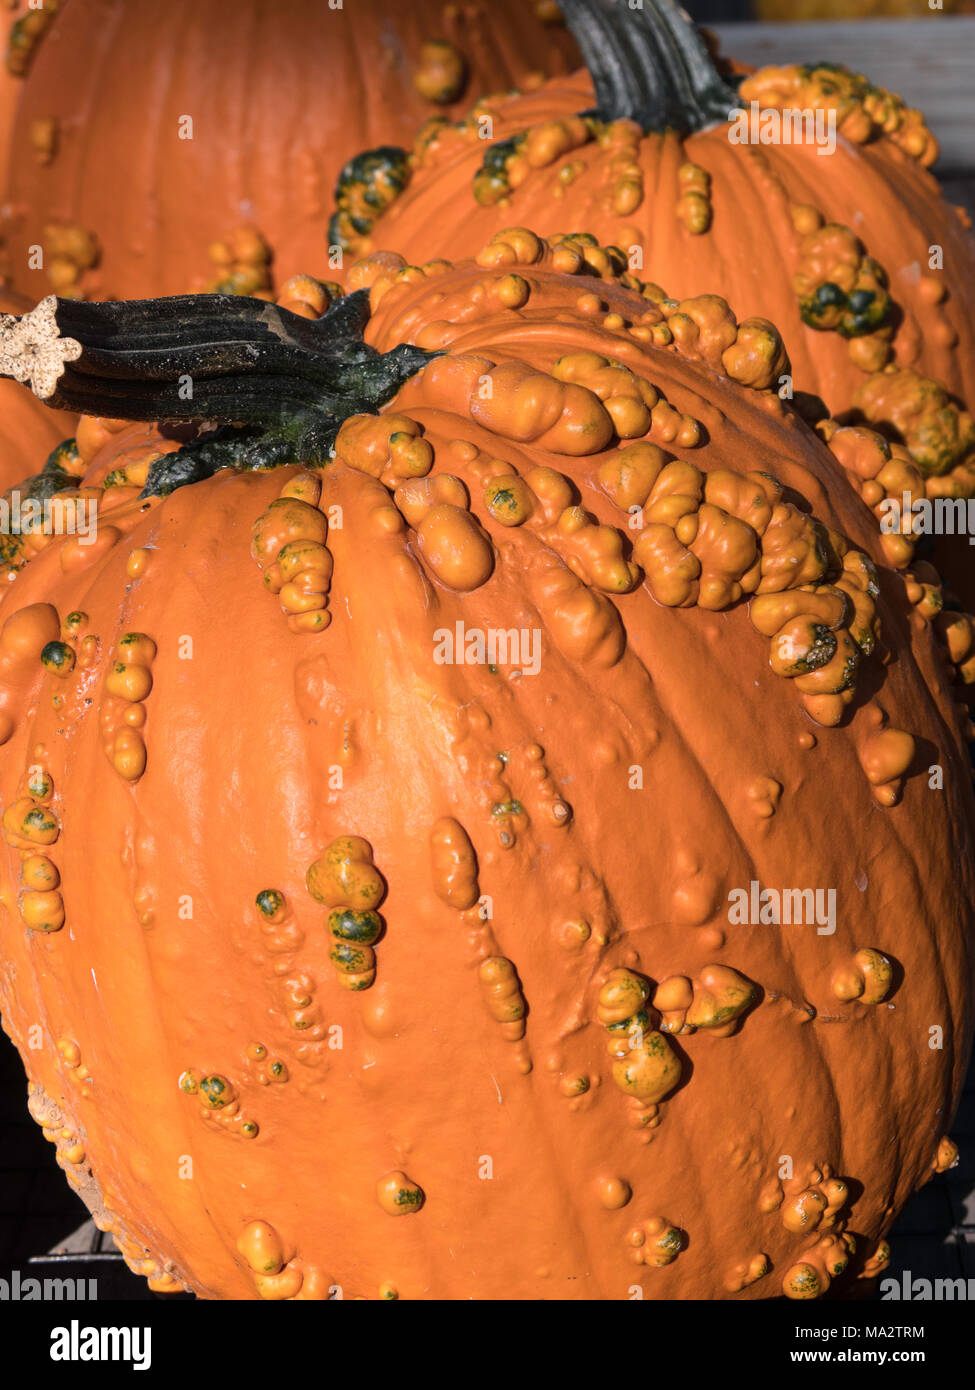 vertical orange pumpkin with bumpy texture Stock Photo